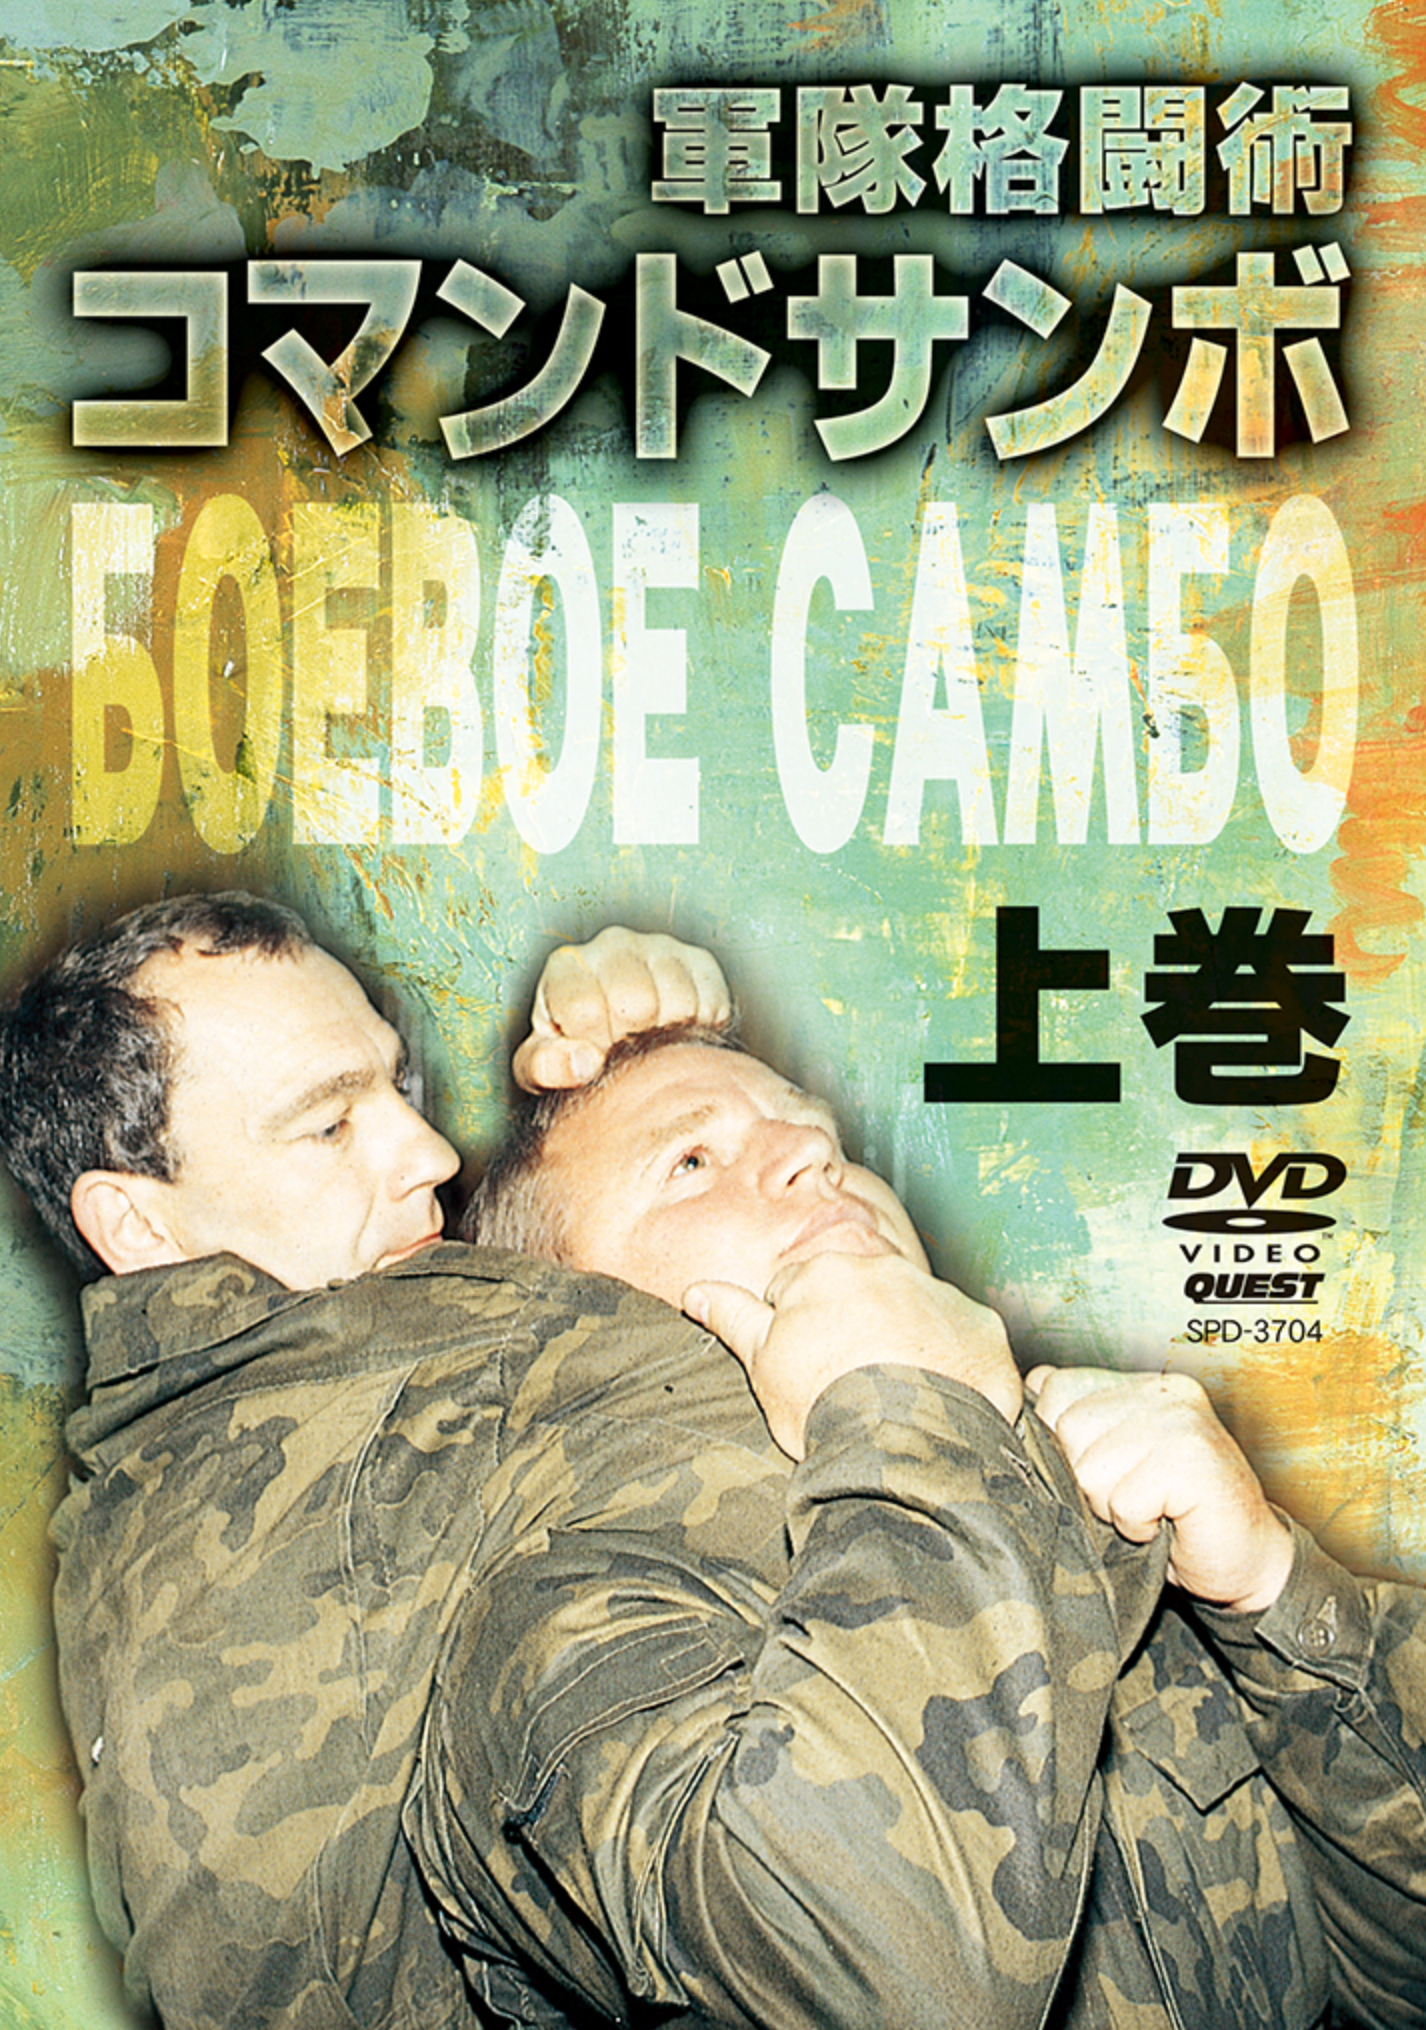 Commando Sambo Vol 1 DVD - Budovideos Inc